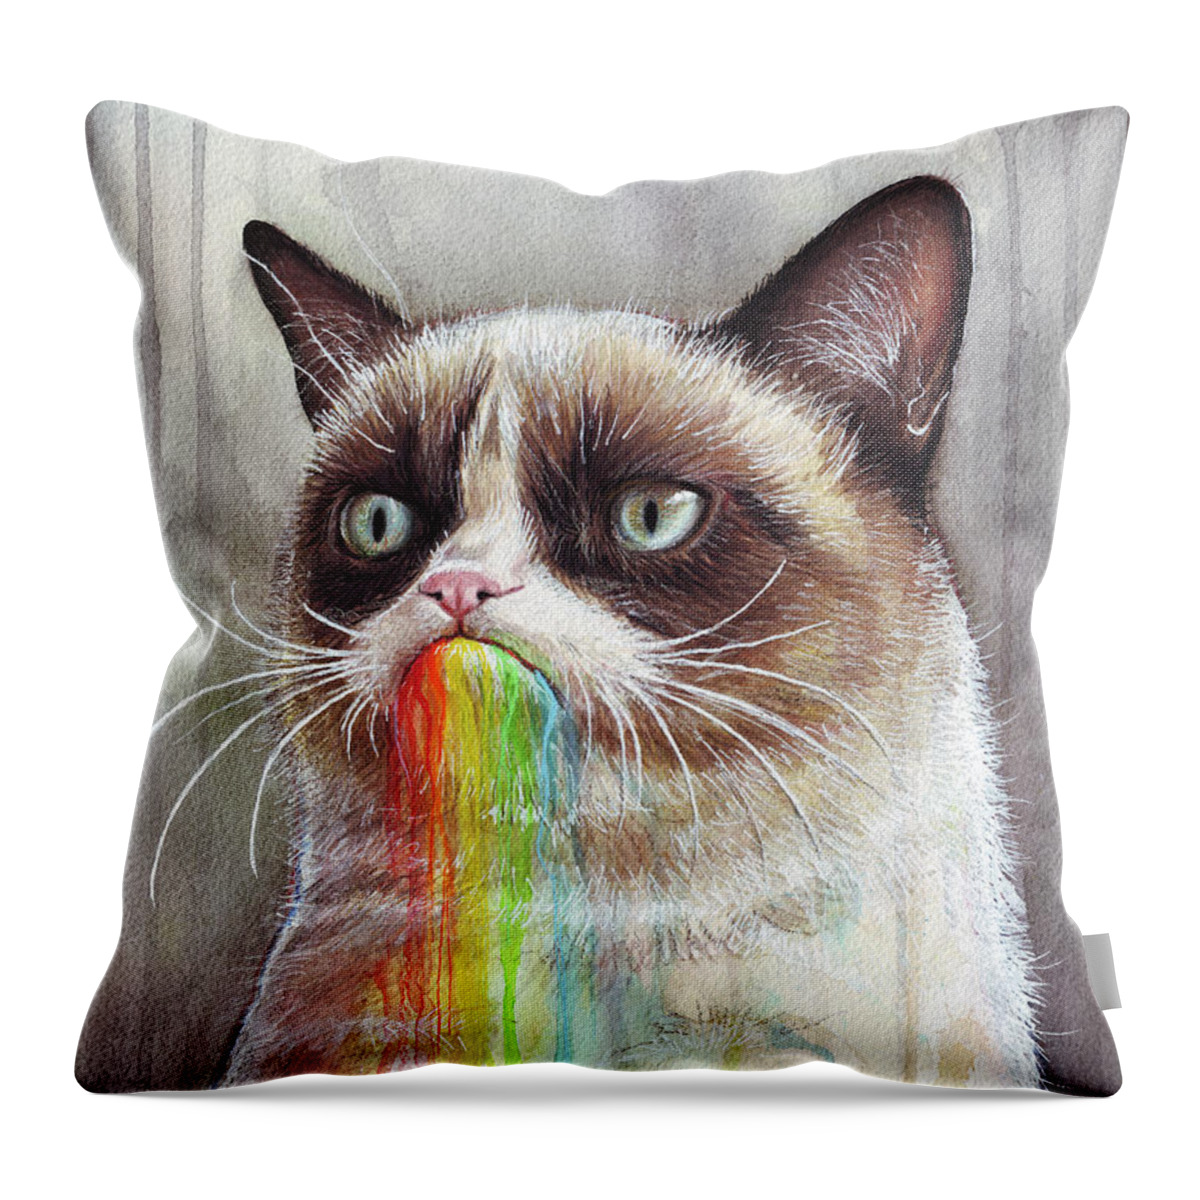 Grumpy Cat Throw Pillow featuring the painting Grumpy Cat Tastes the Rainbow by Olga Shvartsur